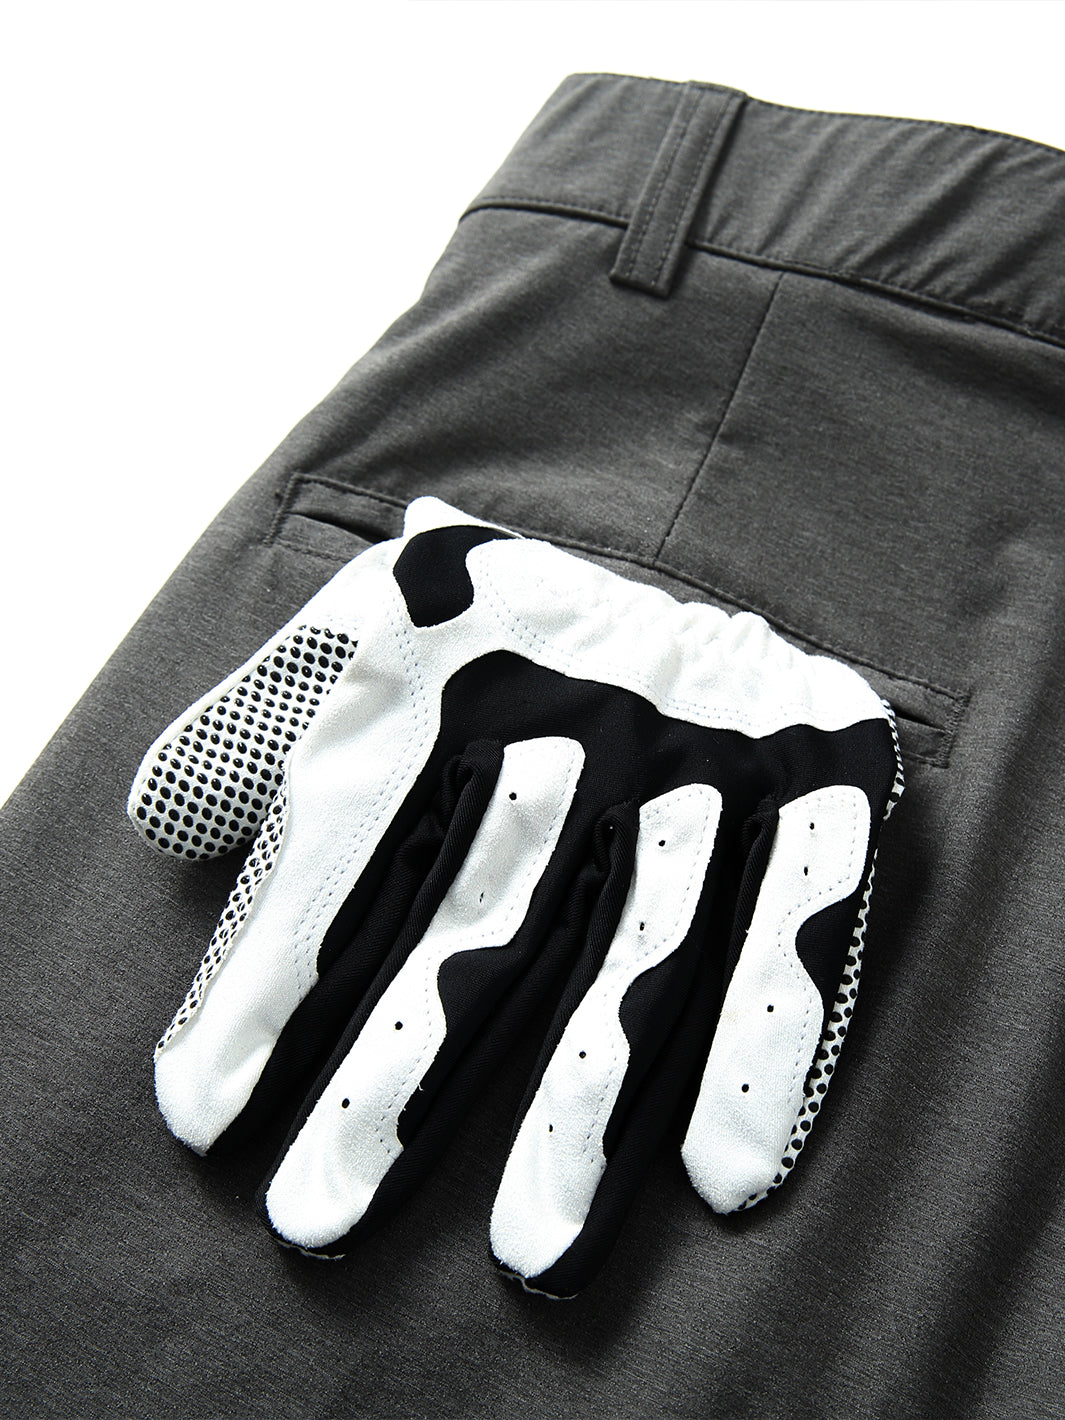 10" Inseam Solid Golf Shorts-Light Grey